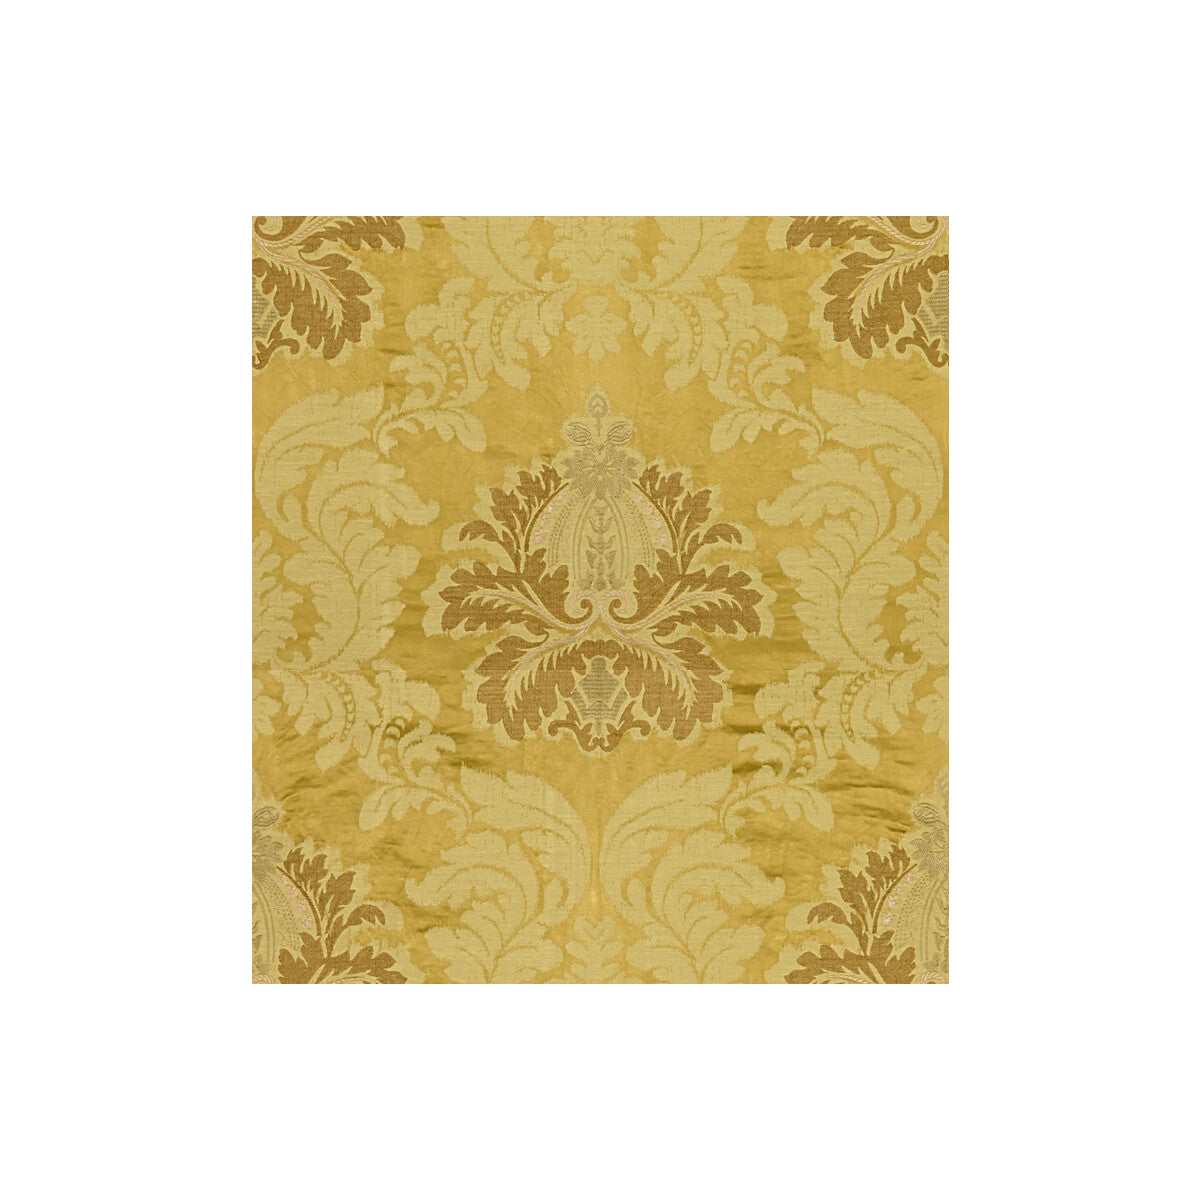 Emilia Damask fabric in gold color - pattern 2012154.4.0 - by Lee Jofa in the Oscar De La Renta II collection